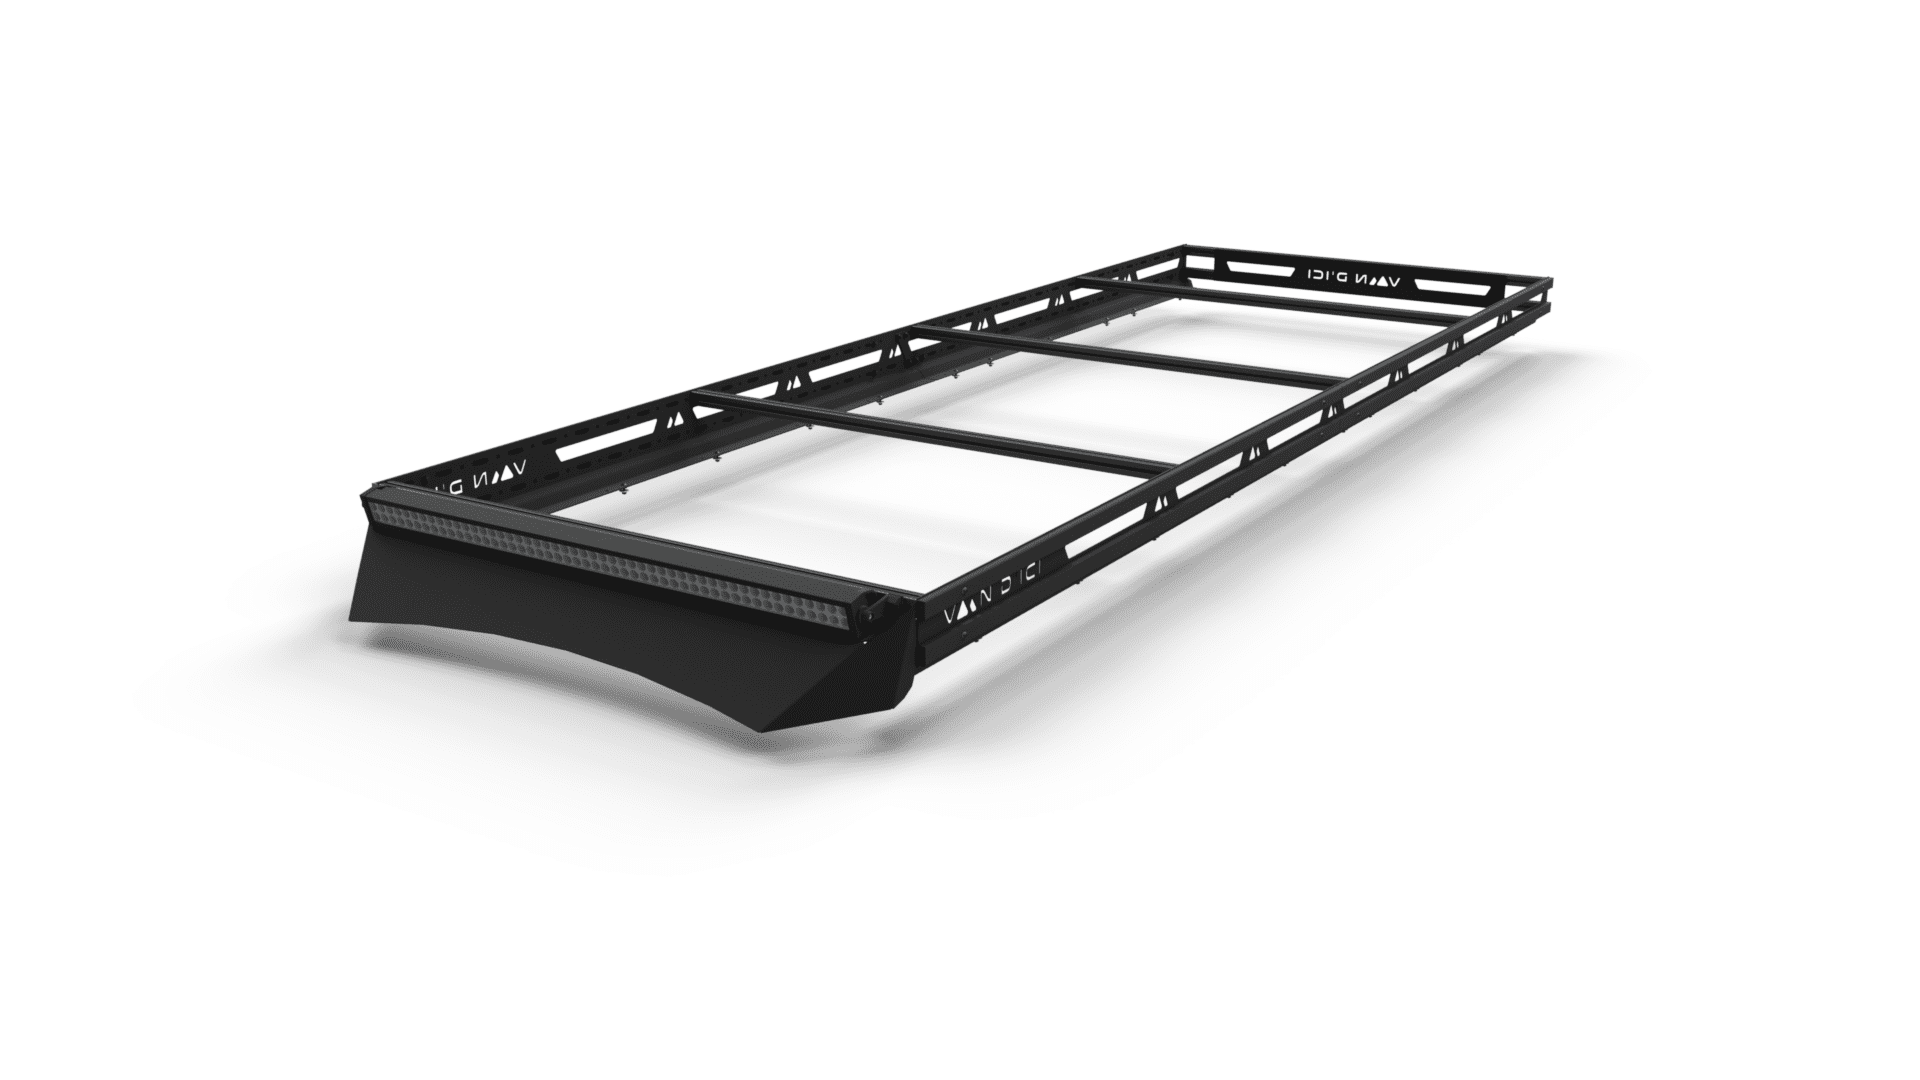 Modular Roof Rack for Transit | Safari Edition